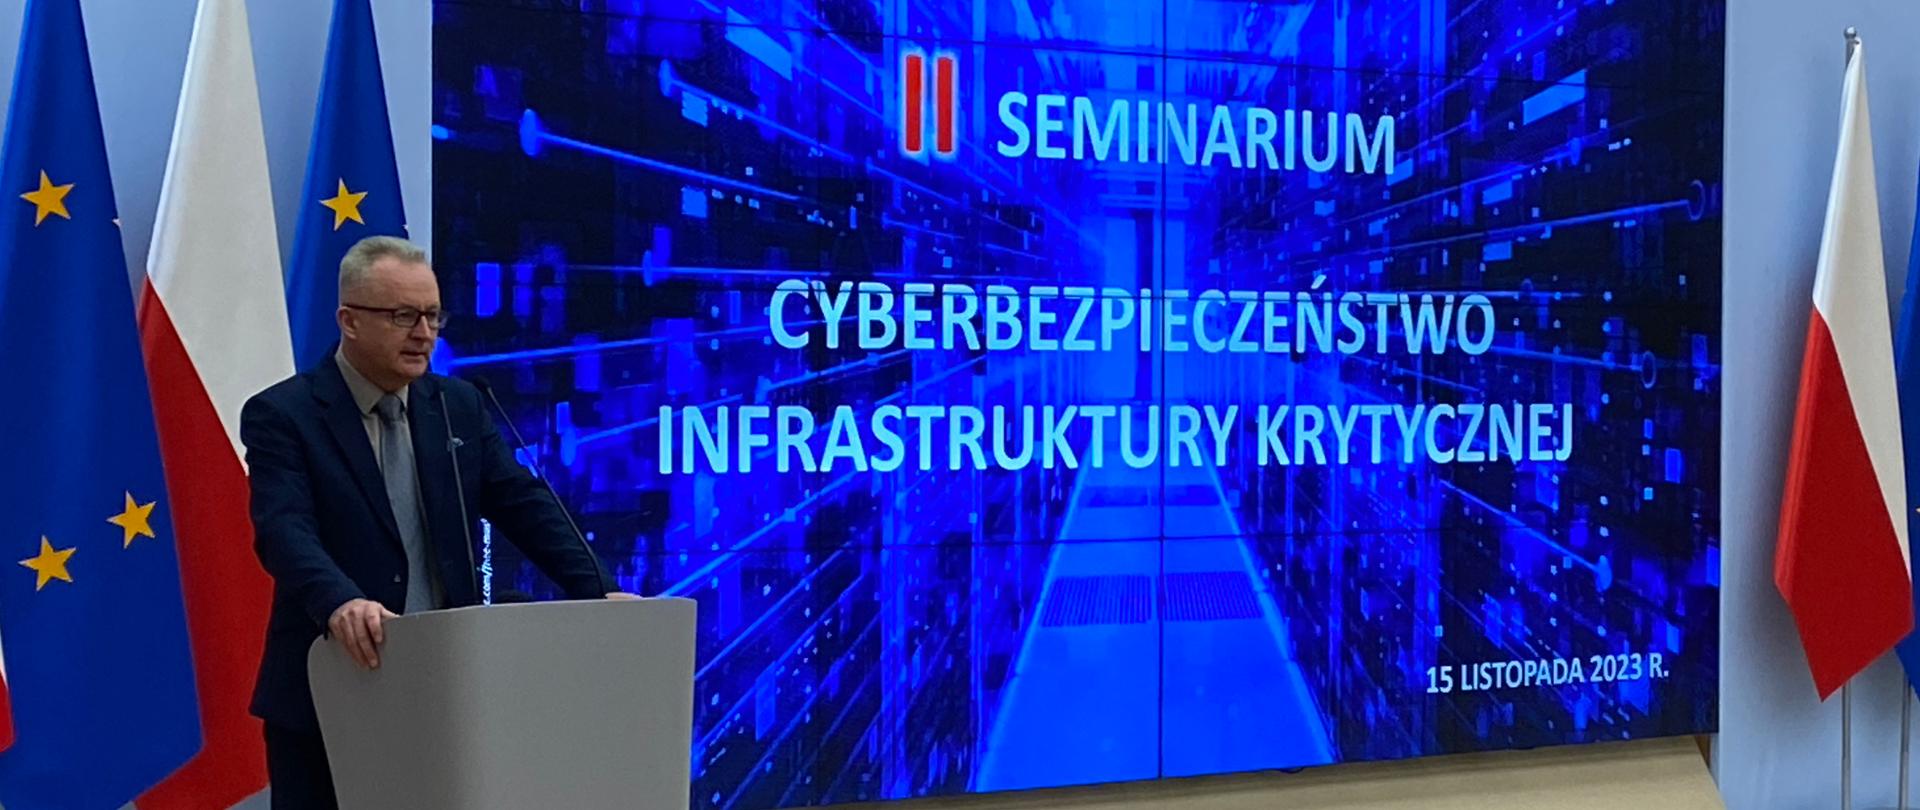 Cyberbezpieczeństwo IK – II seminarium. Dyr RCB Marek Kubiak